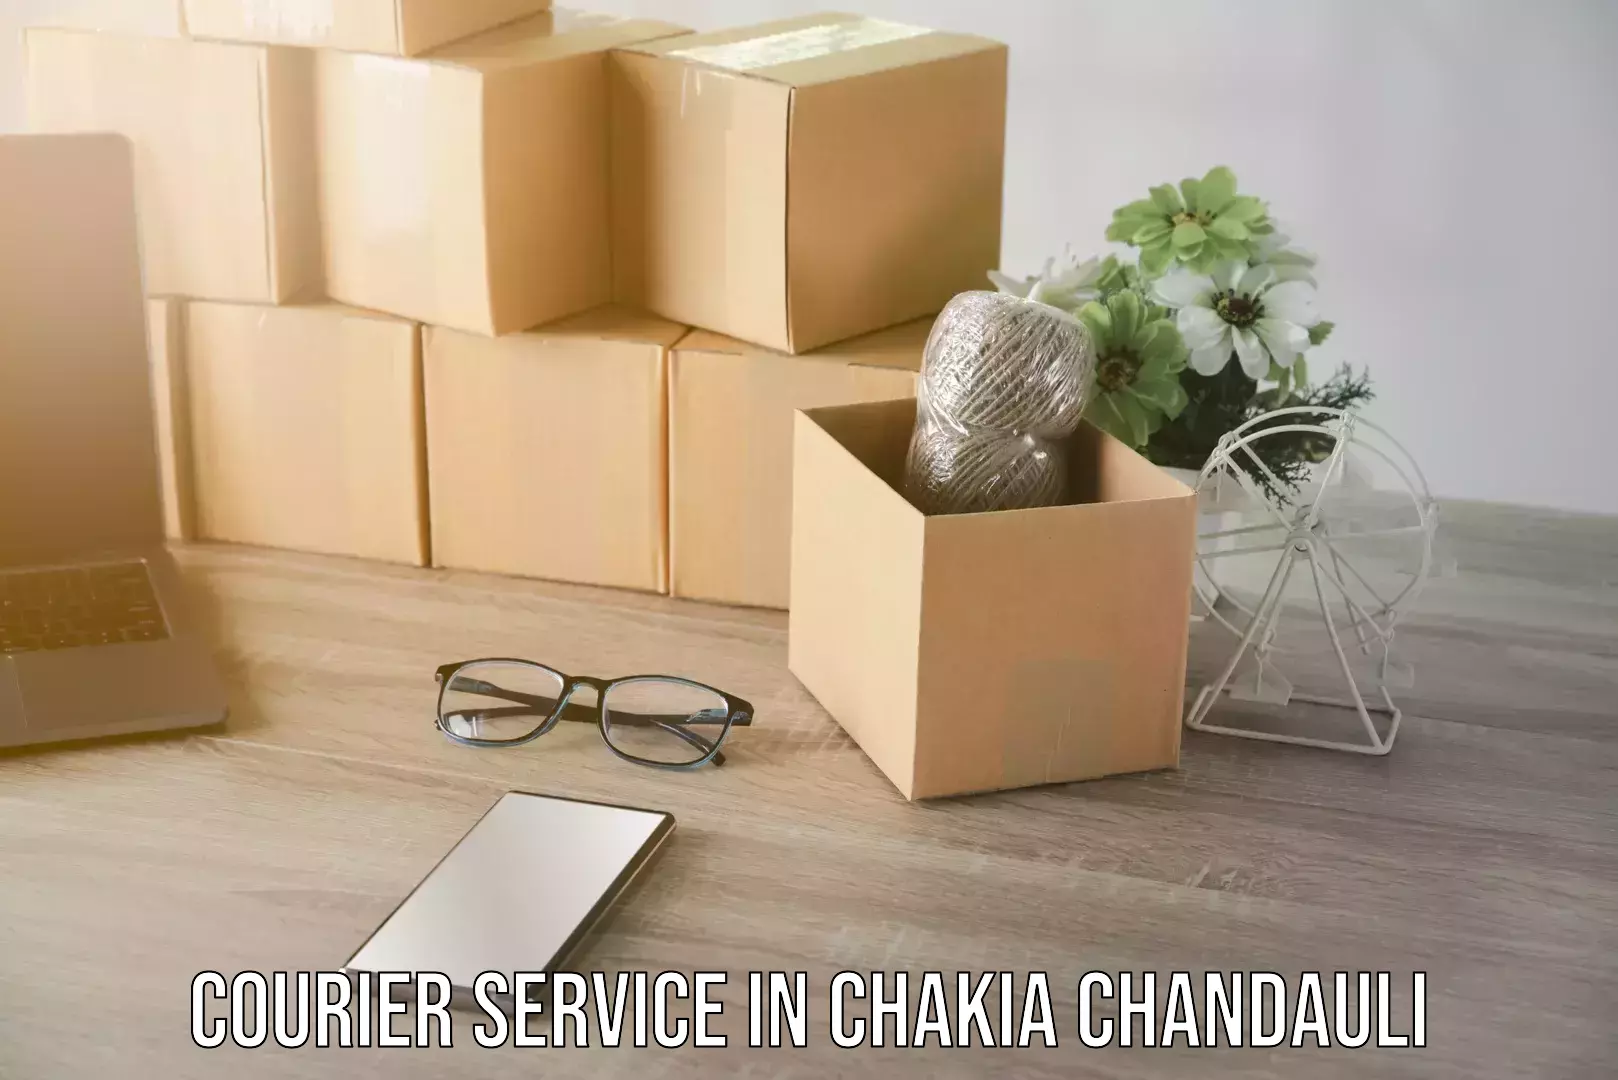 Express postal services in Chakia Chandauli